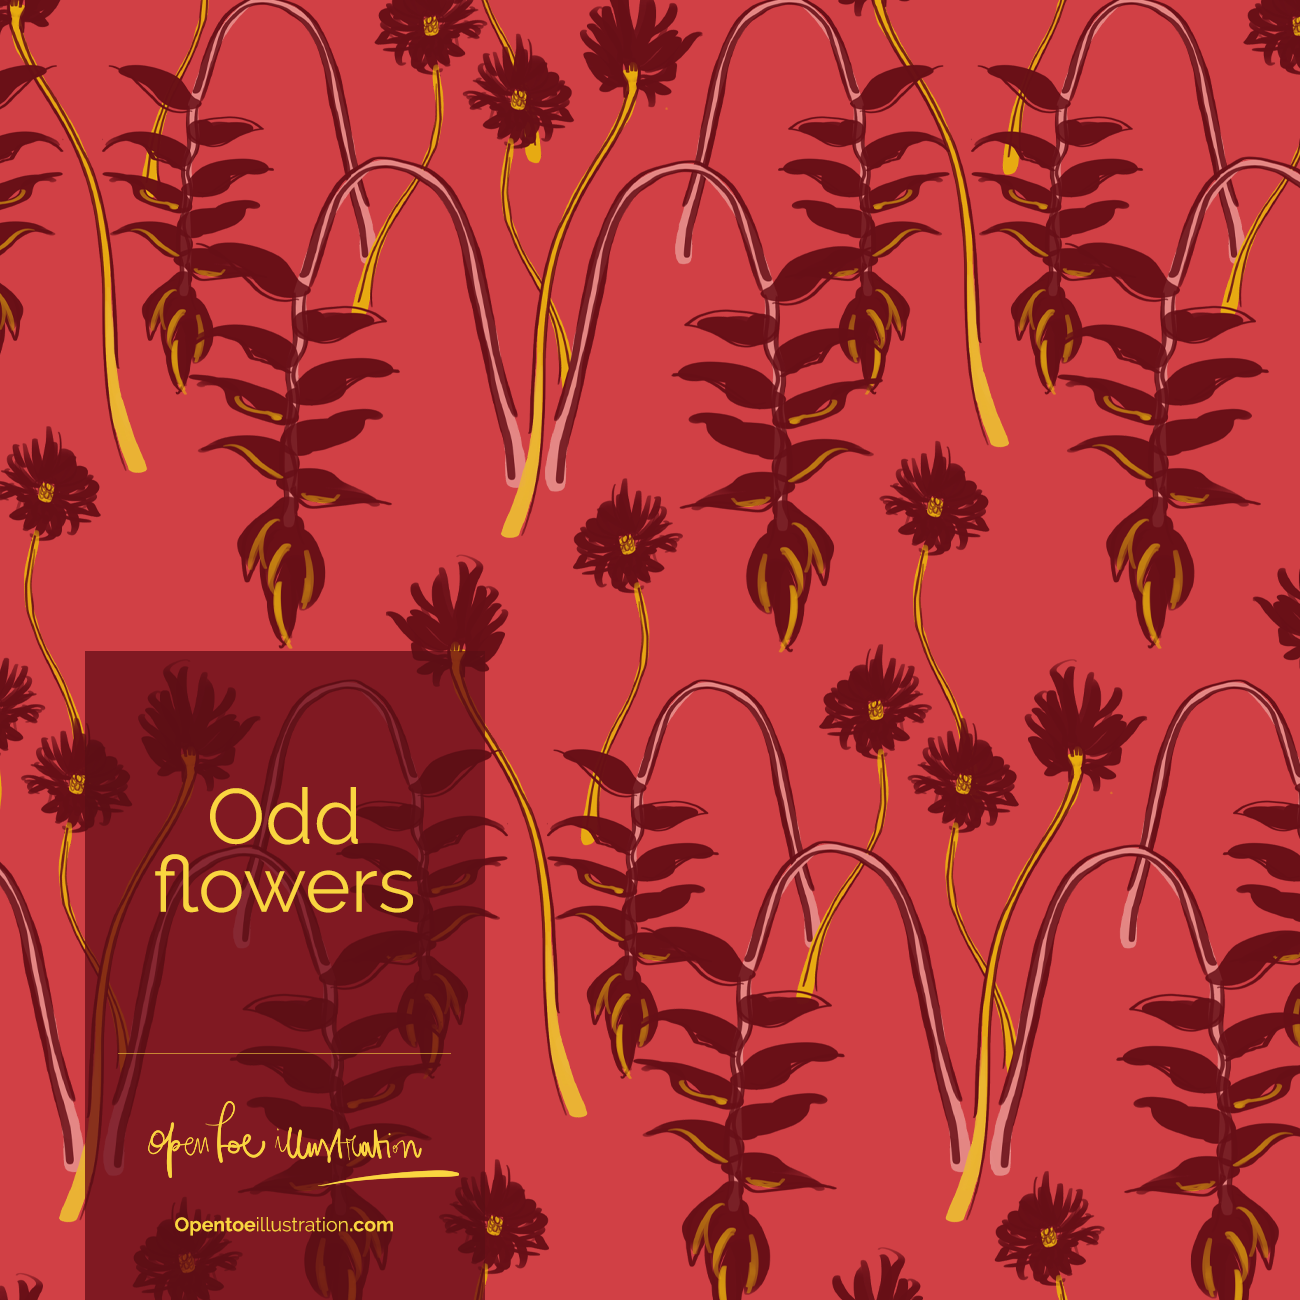 Odd Flowers, textile design by Silvana Mariani